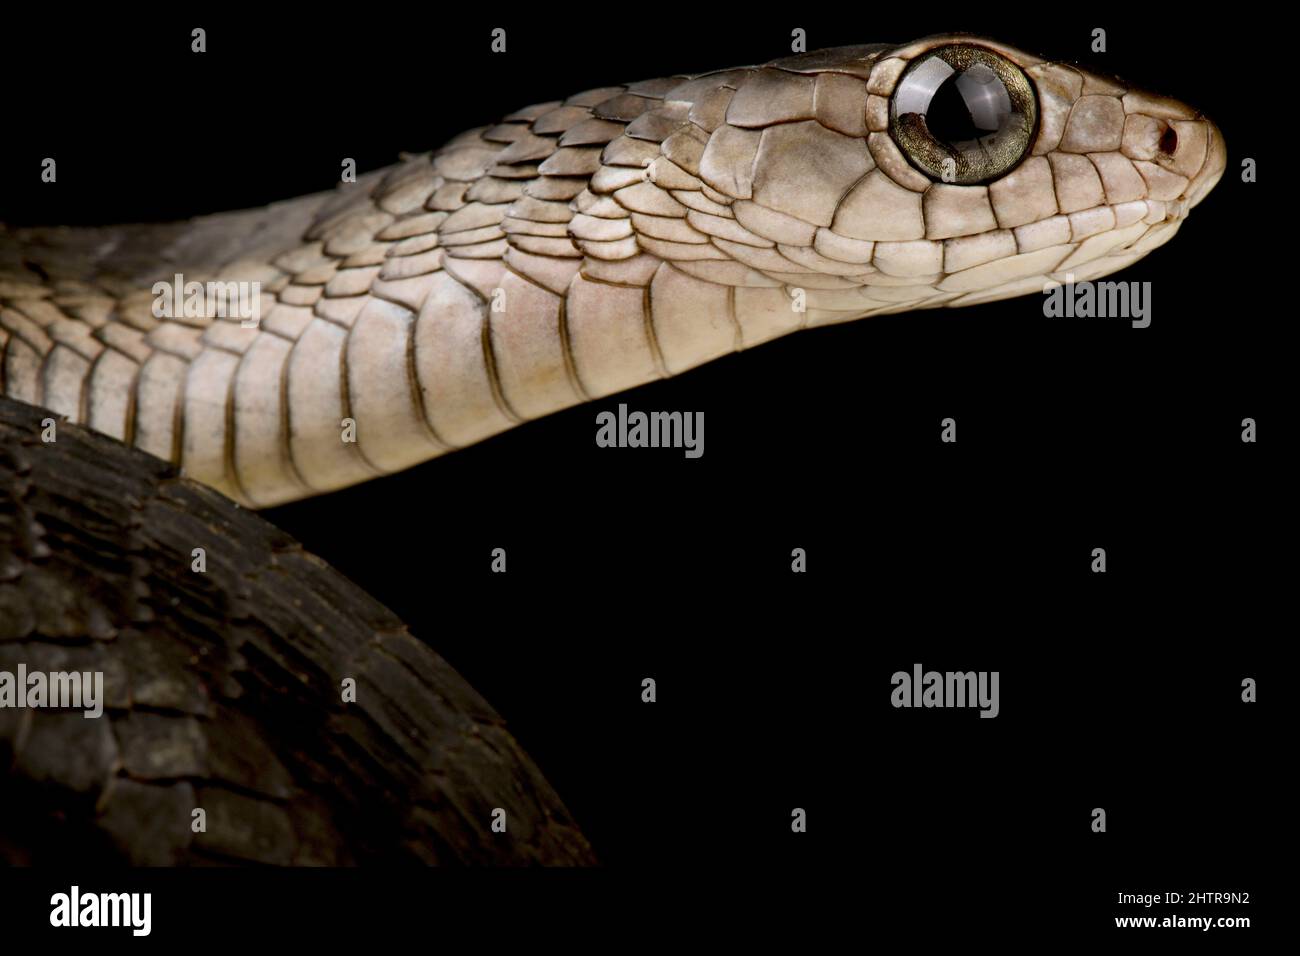 Western black tree snake (Thrasops occidentalis) Stock Photo